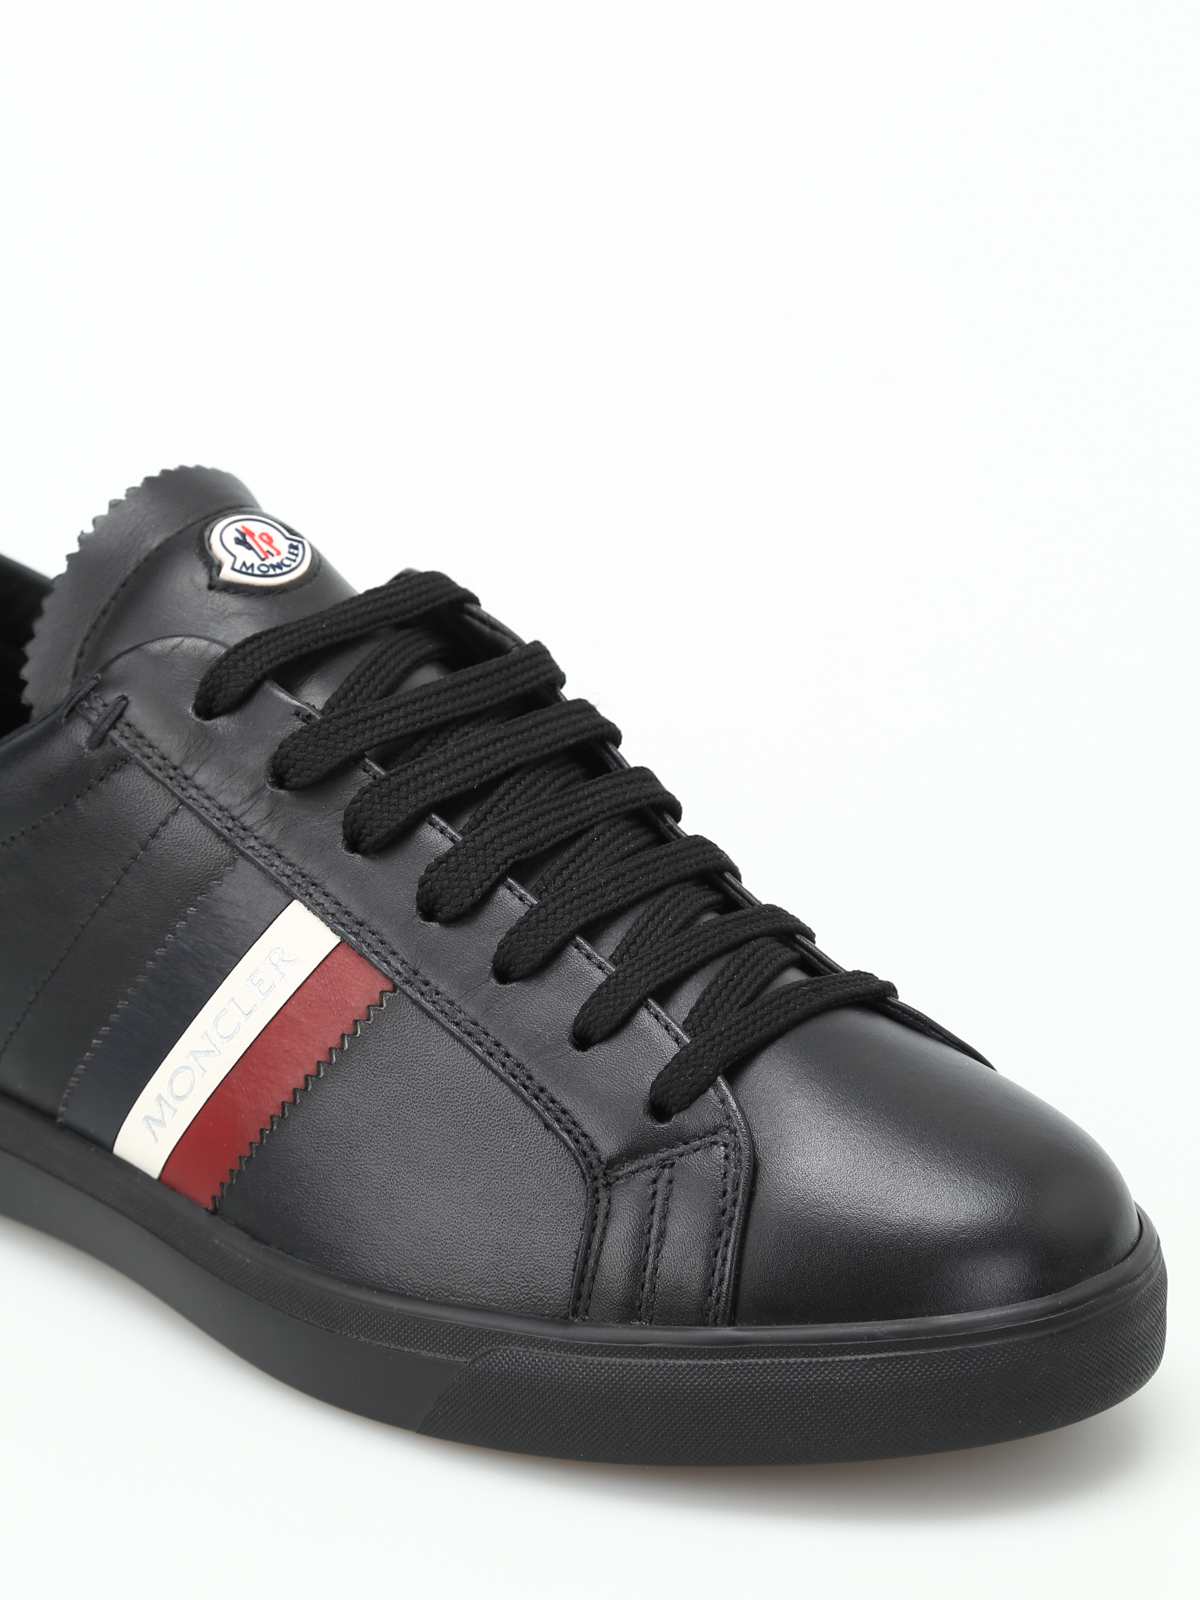 La Monaco black leather sneakers 